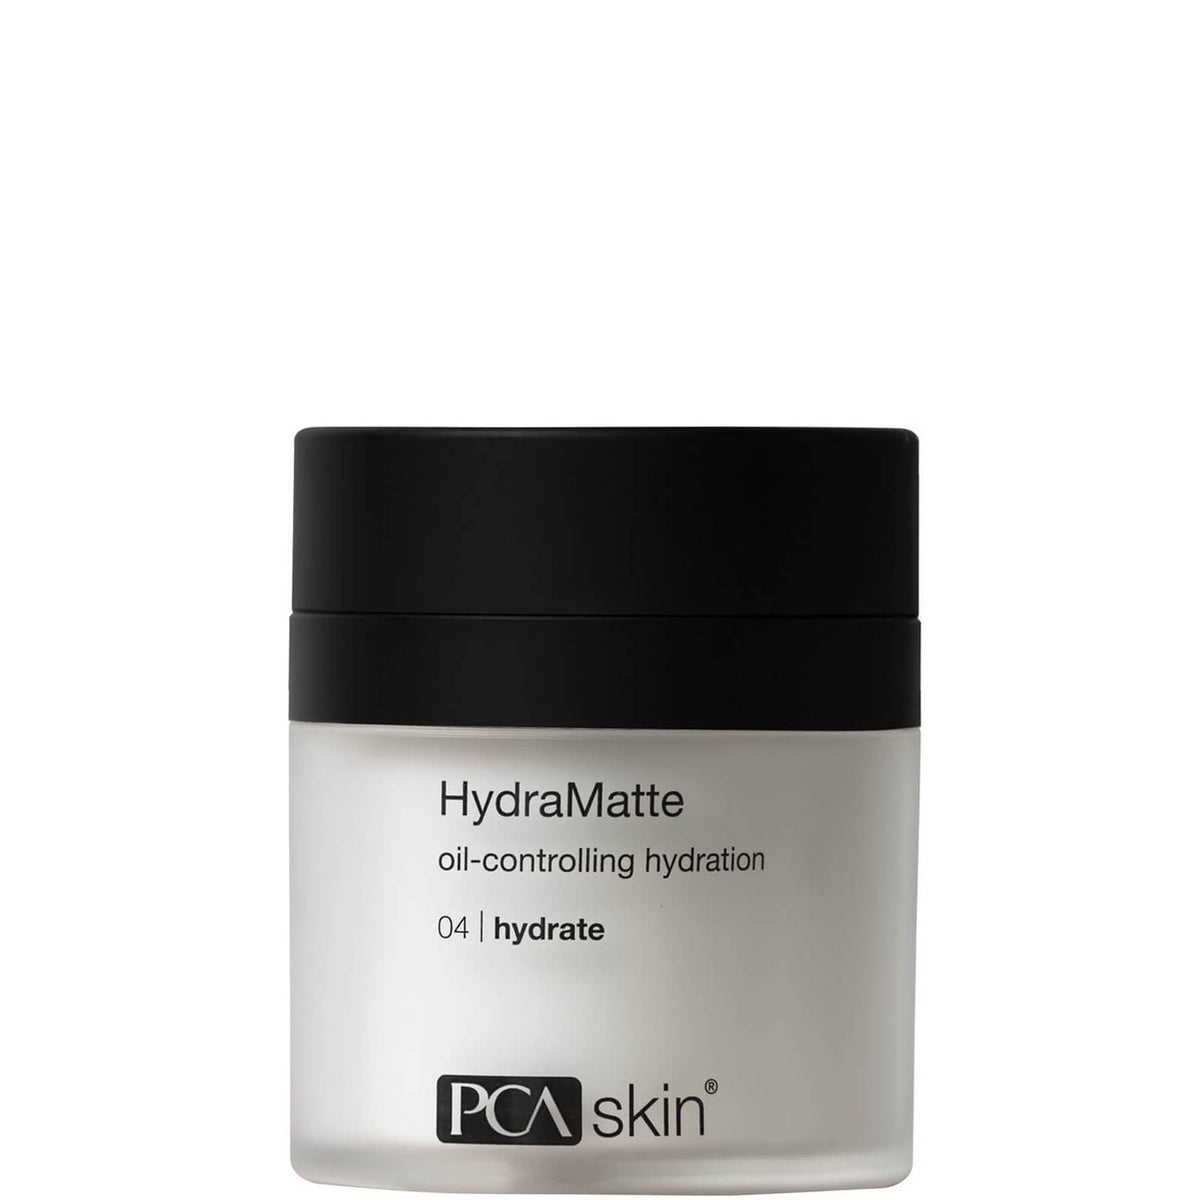 PCA skin | HydraMatte - hydrateert met matte finish